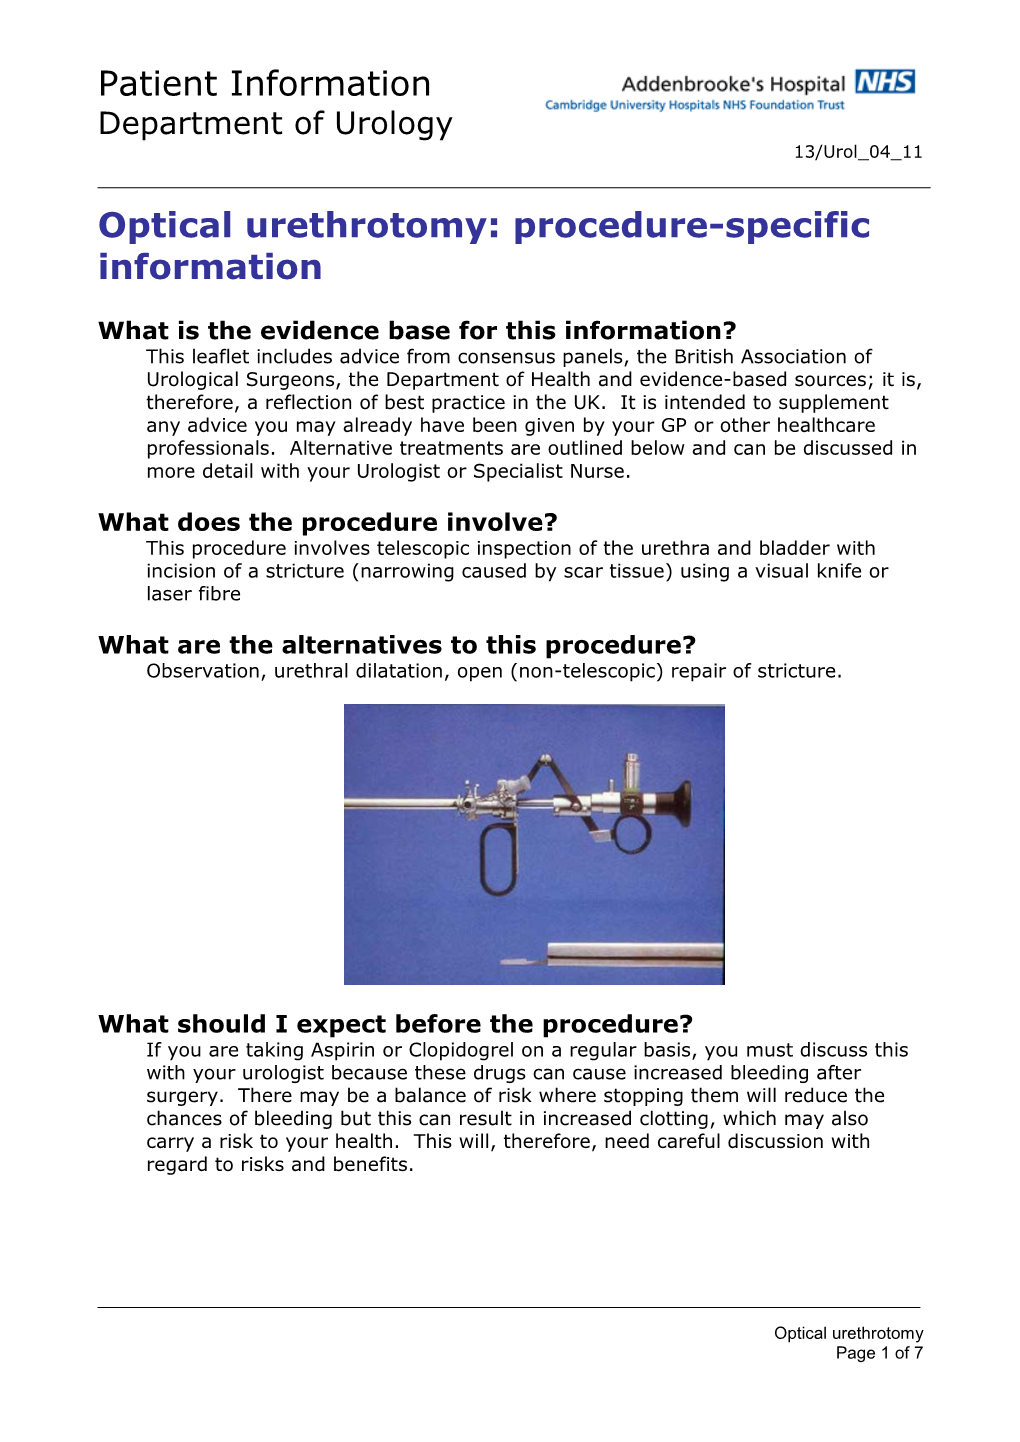 Optical Urethrotomy: Procedure-Specific Information